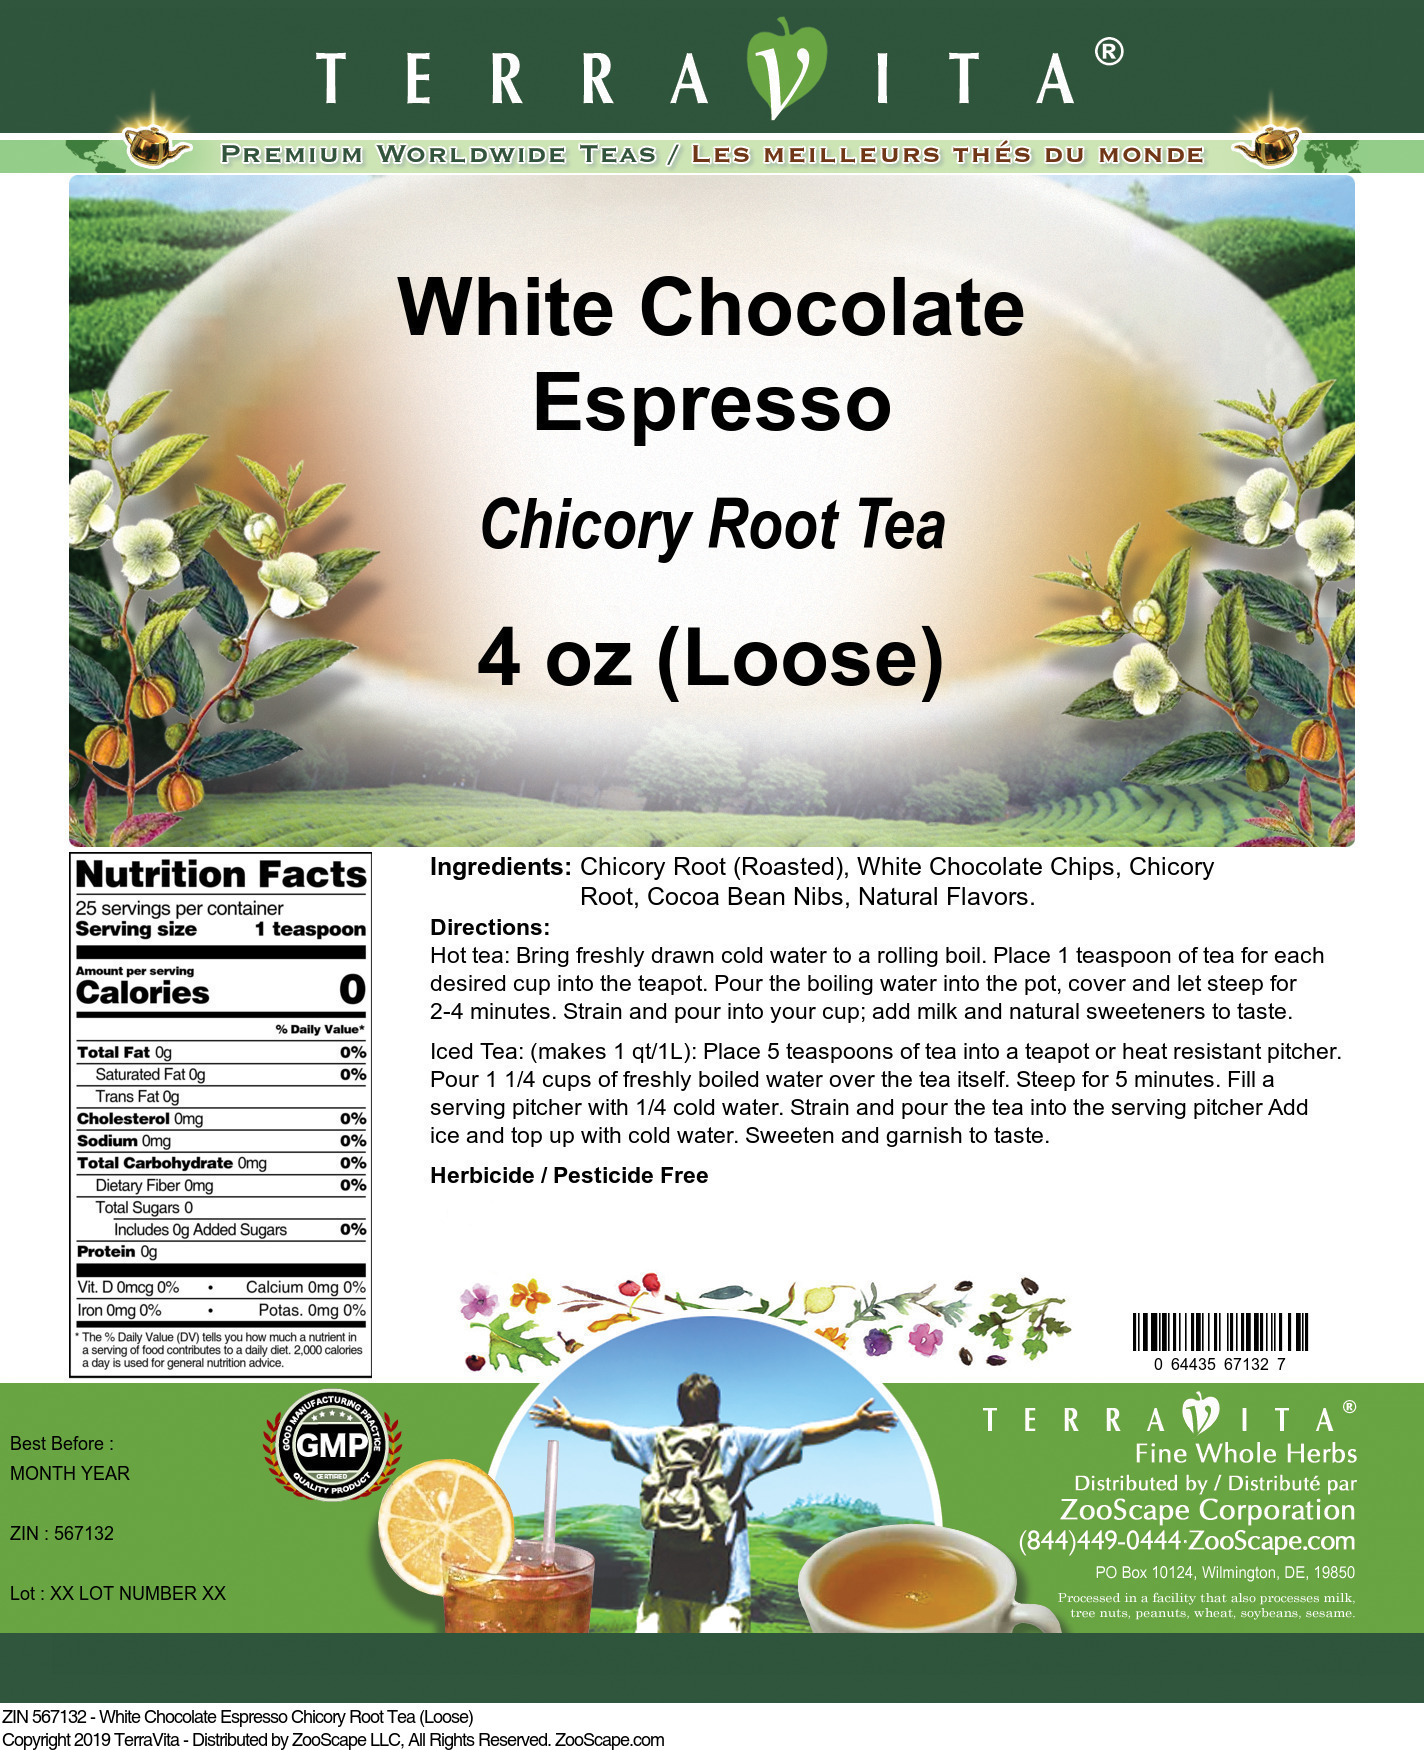 White Chocolate Espresso Chicory Root Tea (Loose) - Label